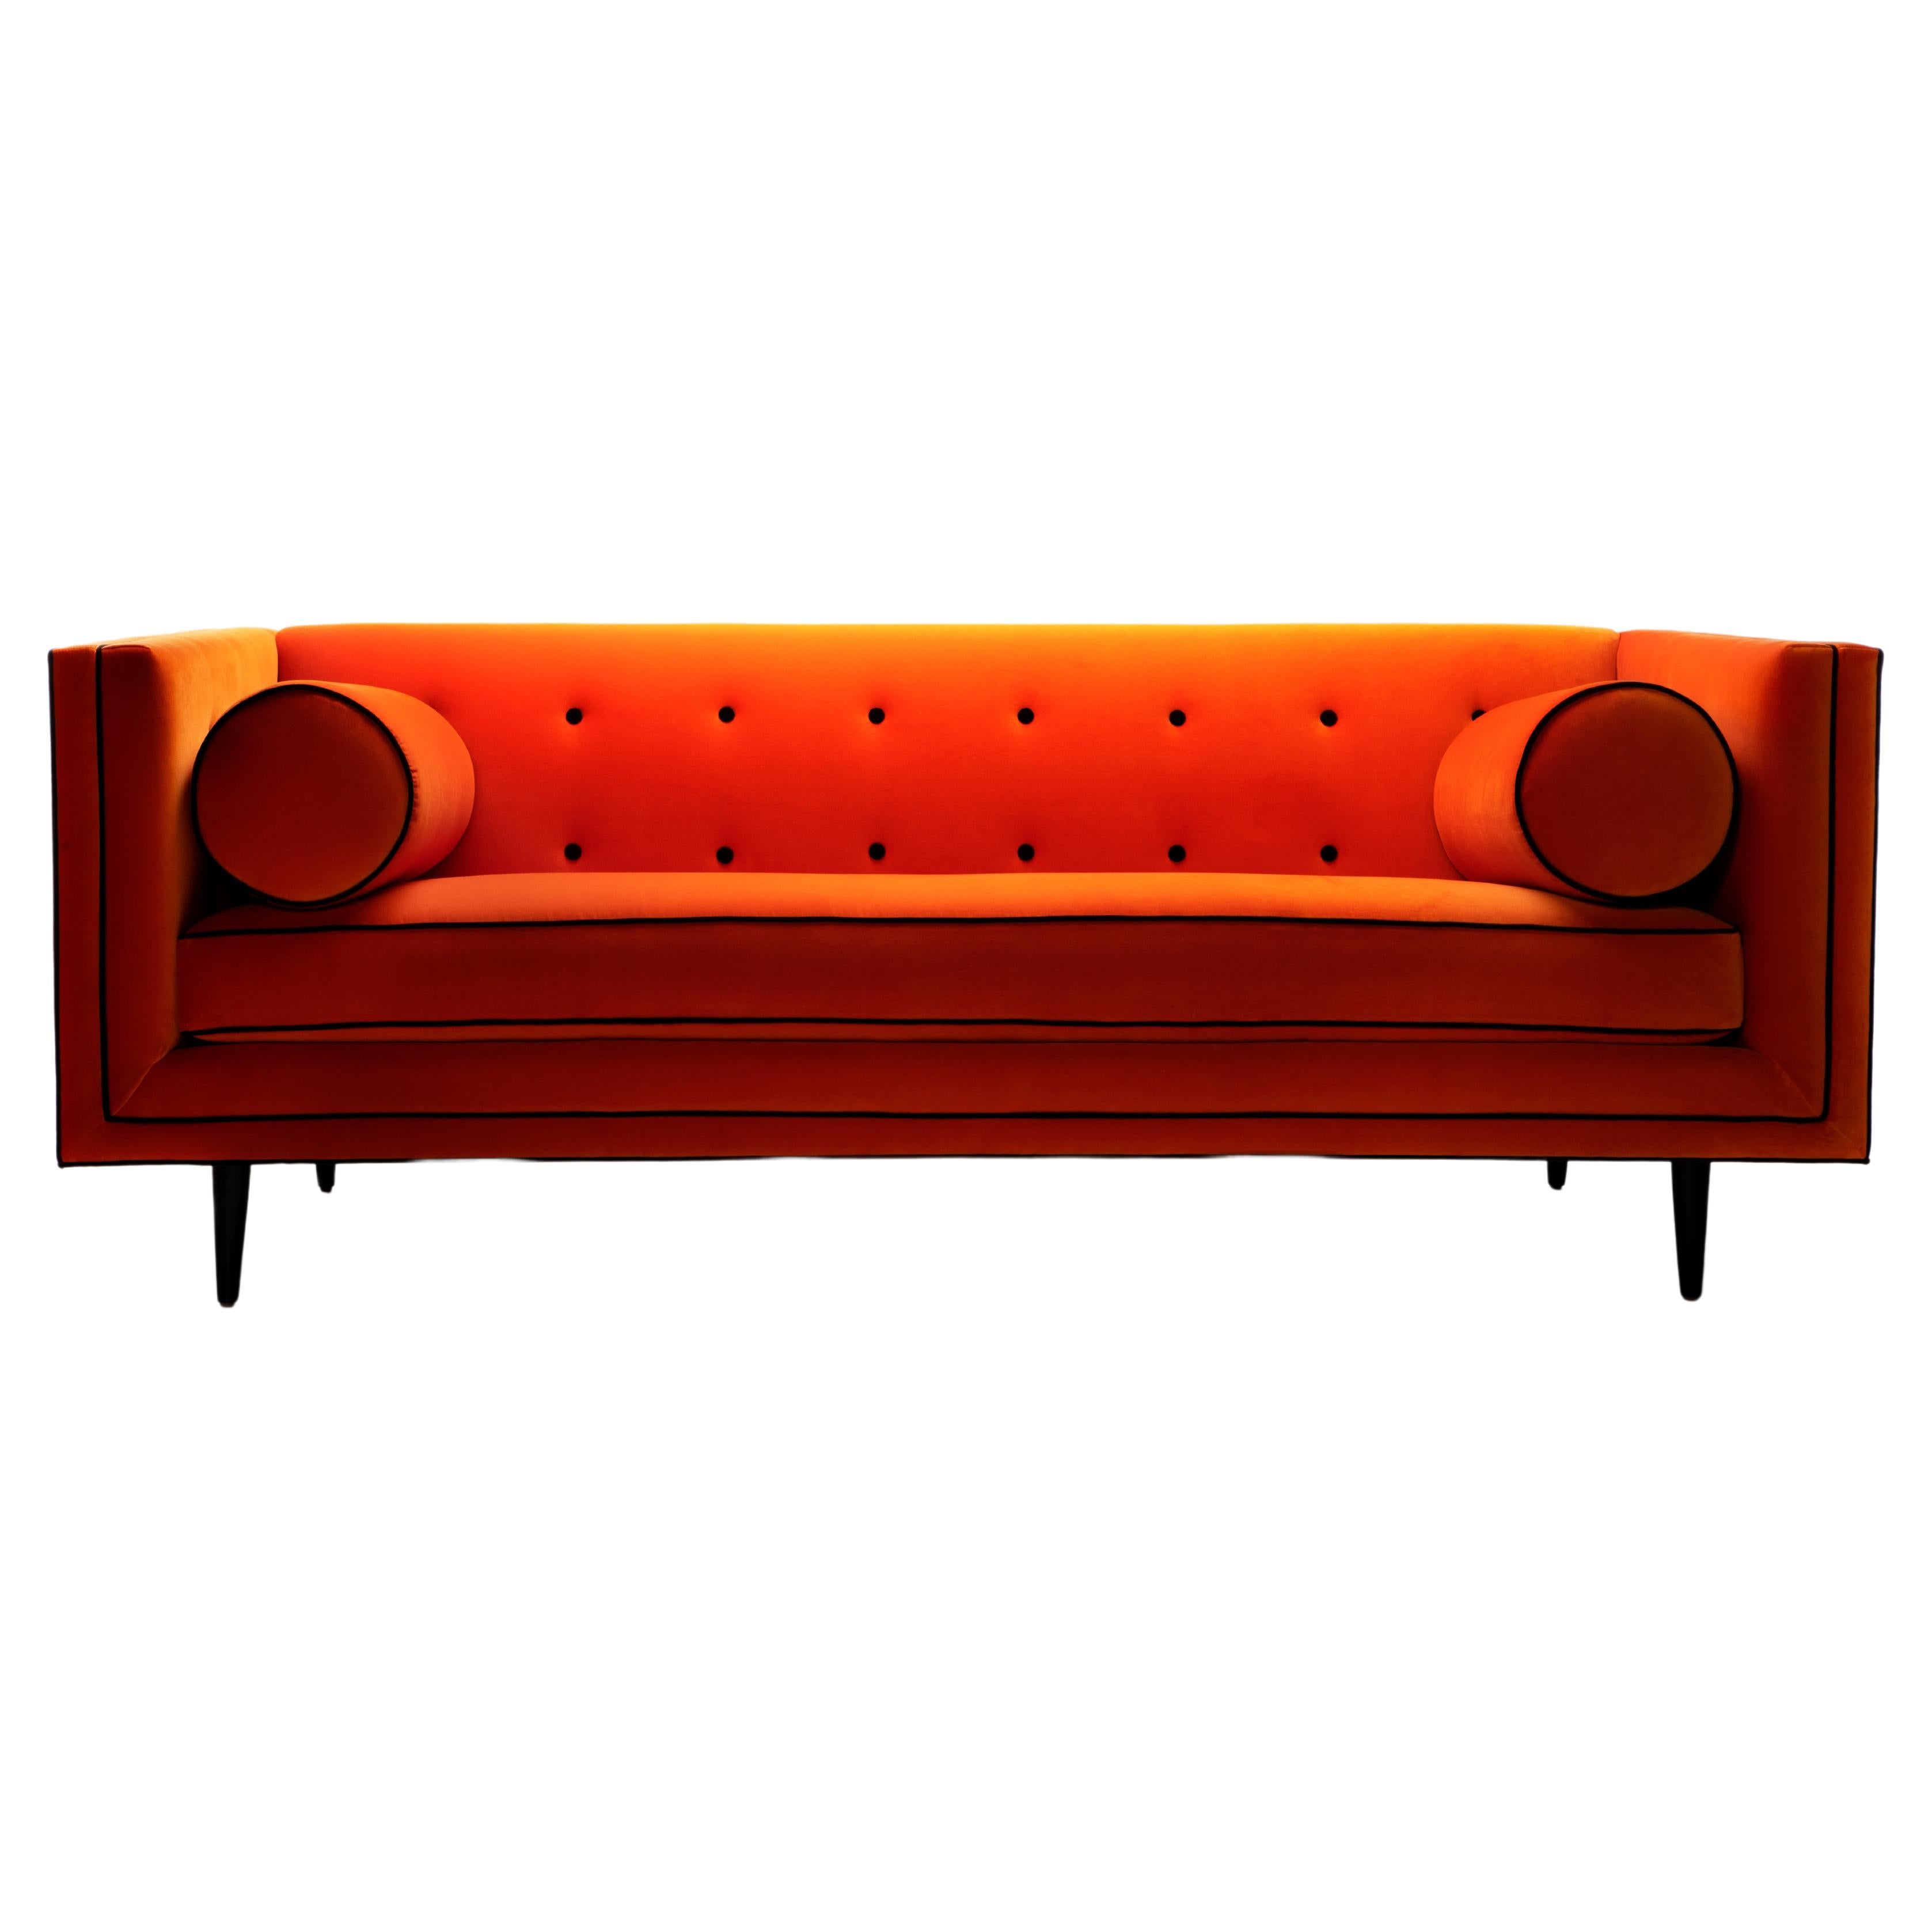 Mid Century Gigi Sofa Hermes Orange Handcrafted by JAMES by Jimmy DeLaurentis For Sale